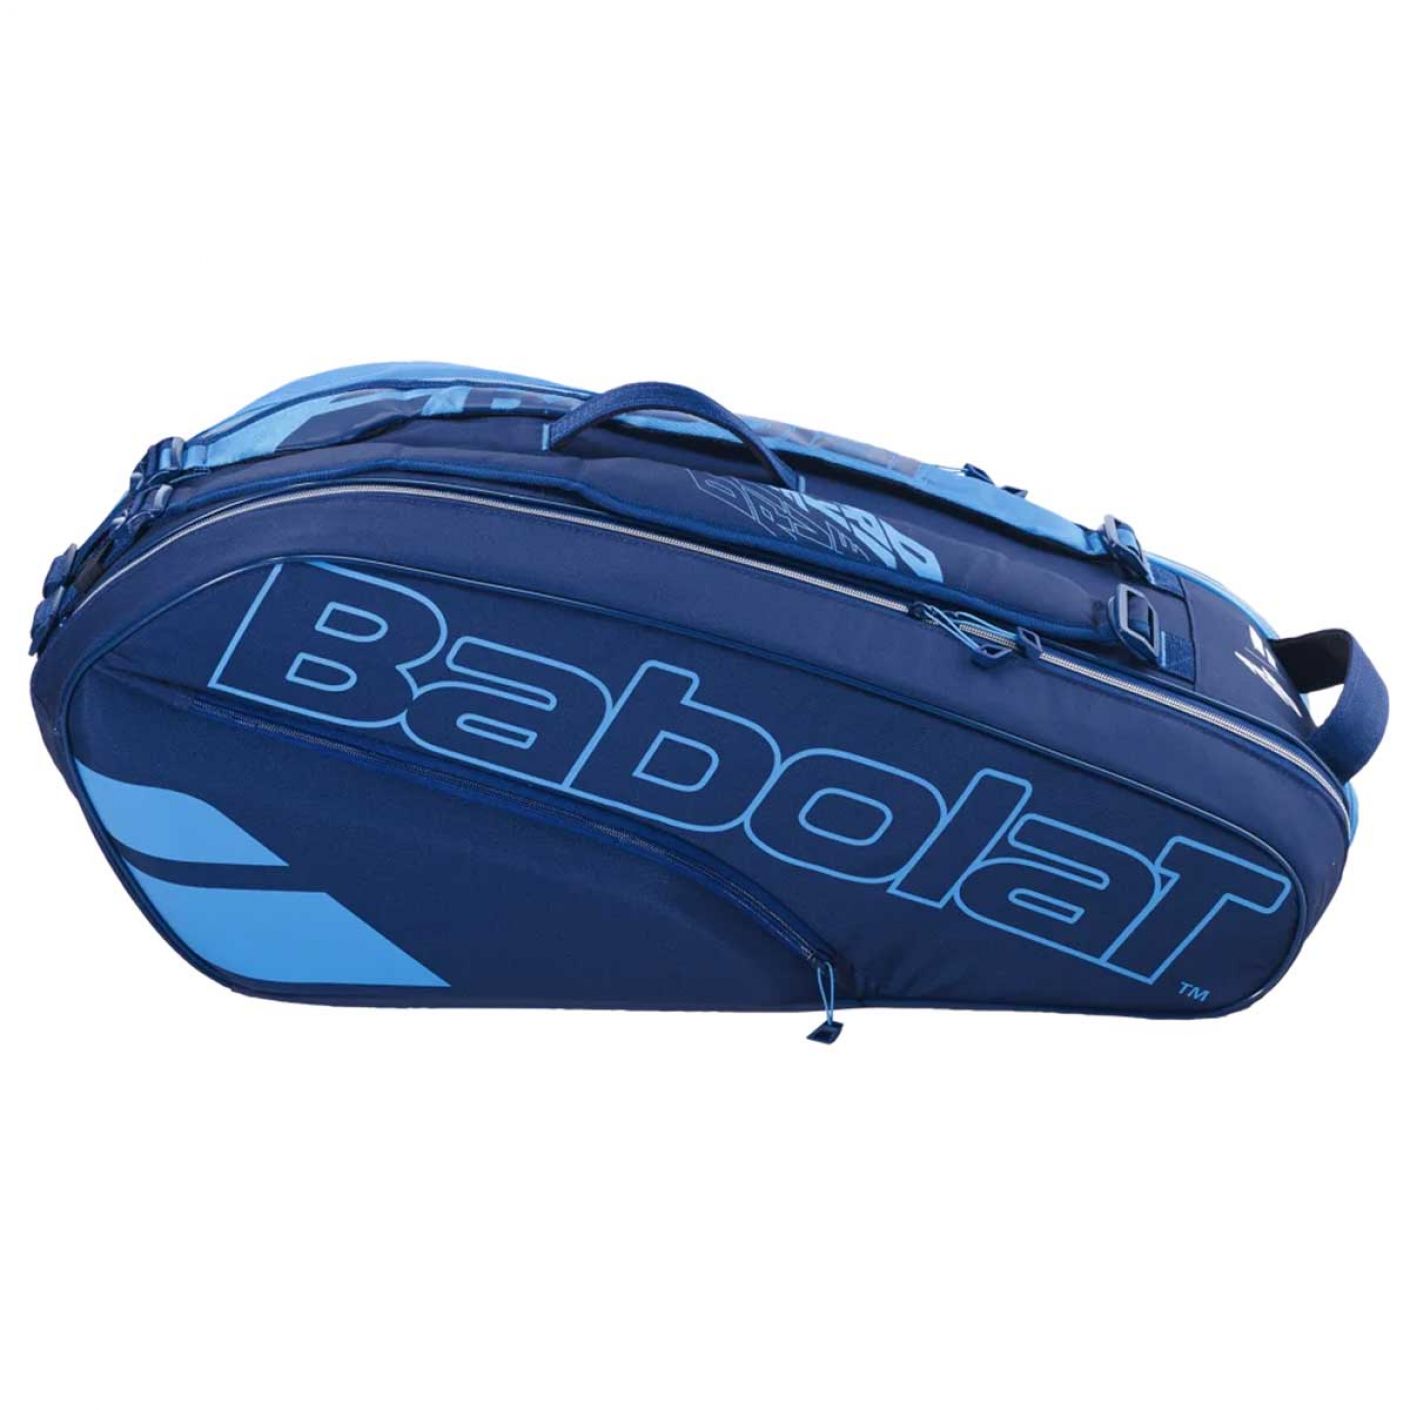 Babolat Borsone Tennis Rh X 6 Pure Drive